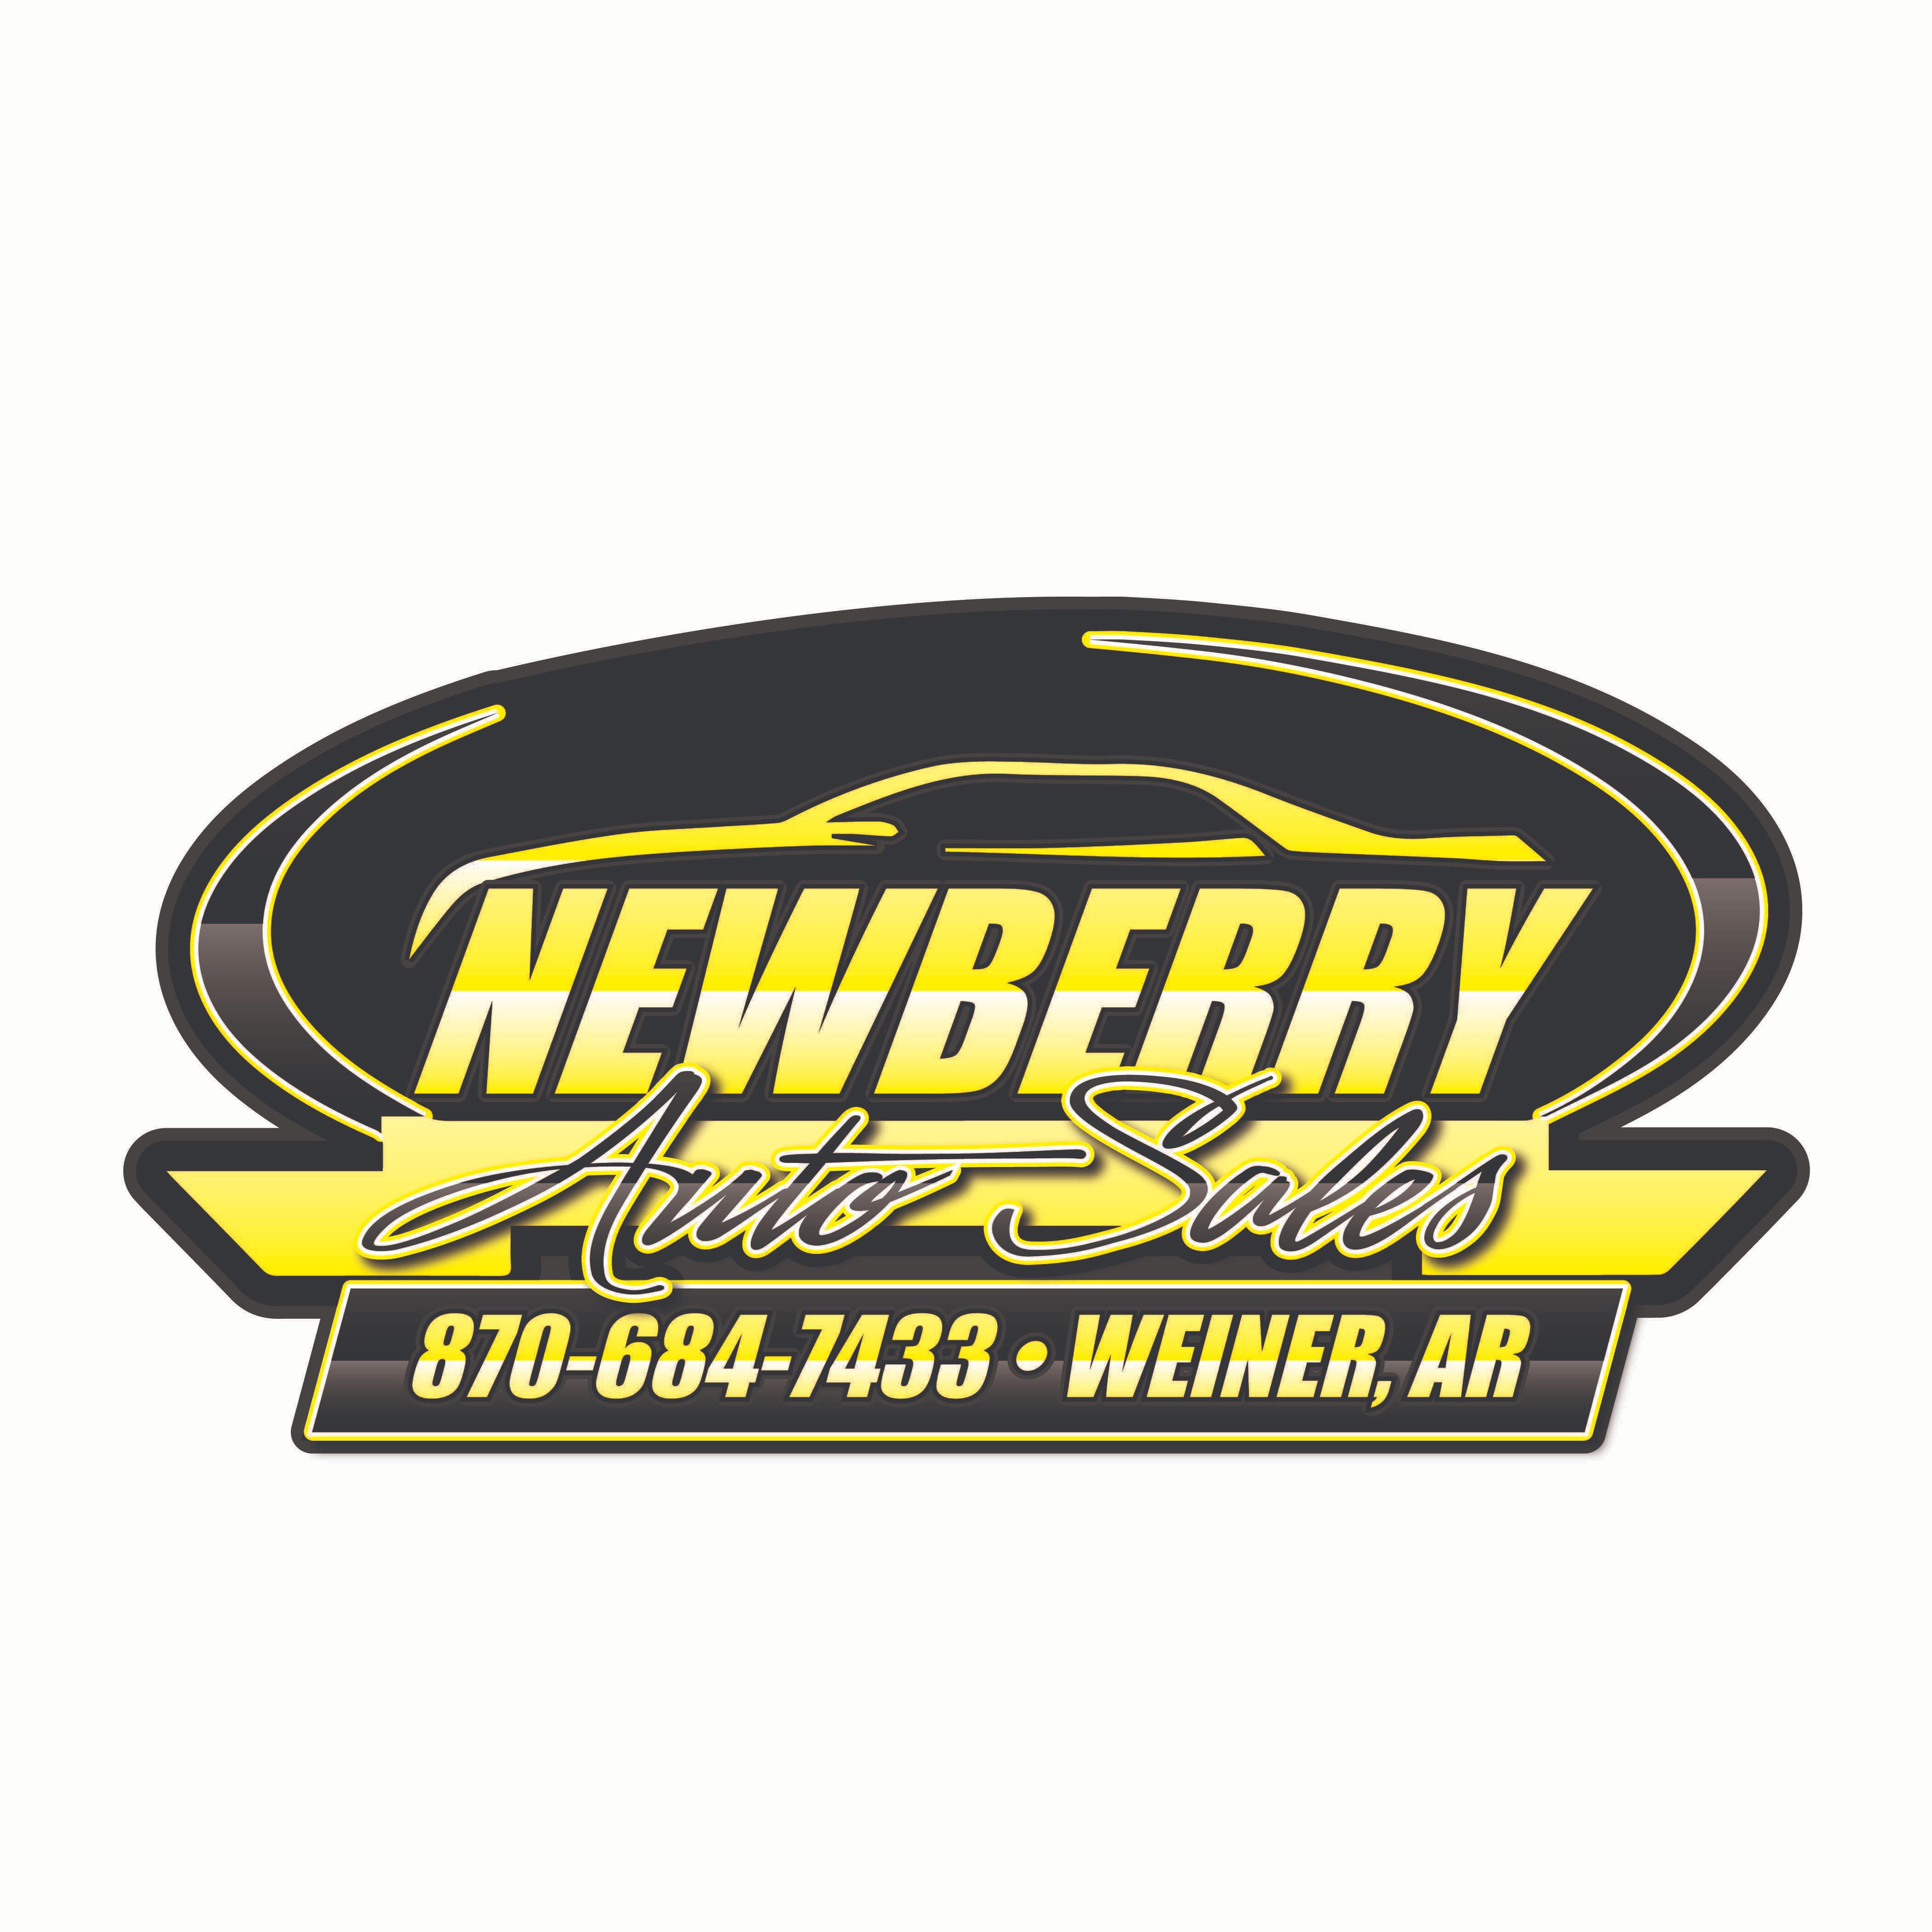 Newberry Auto Sales - Weiner, AR 72479 - (870)684-7433 | ShowMeLocal.com